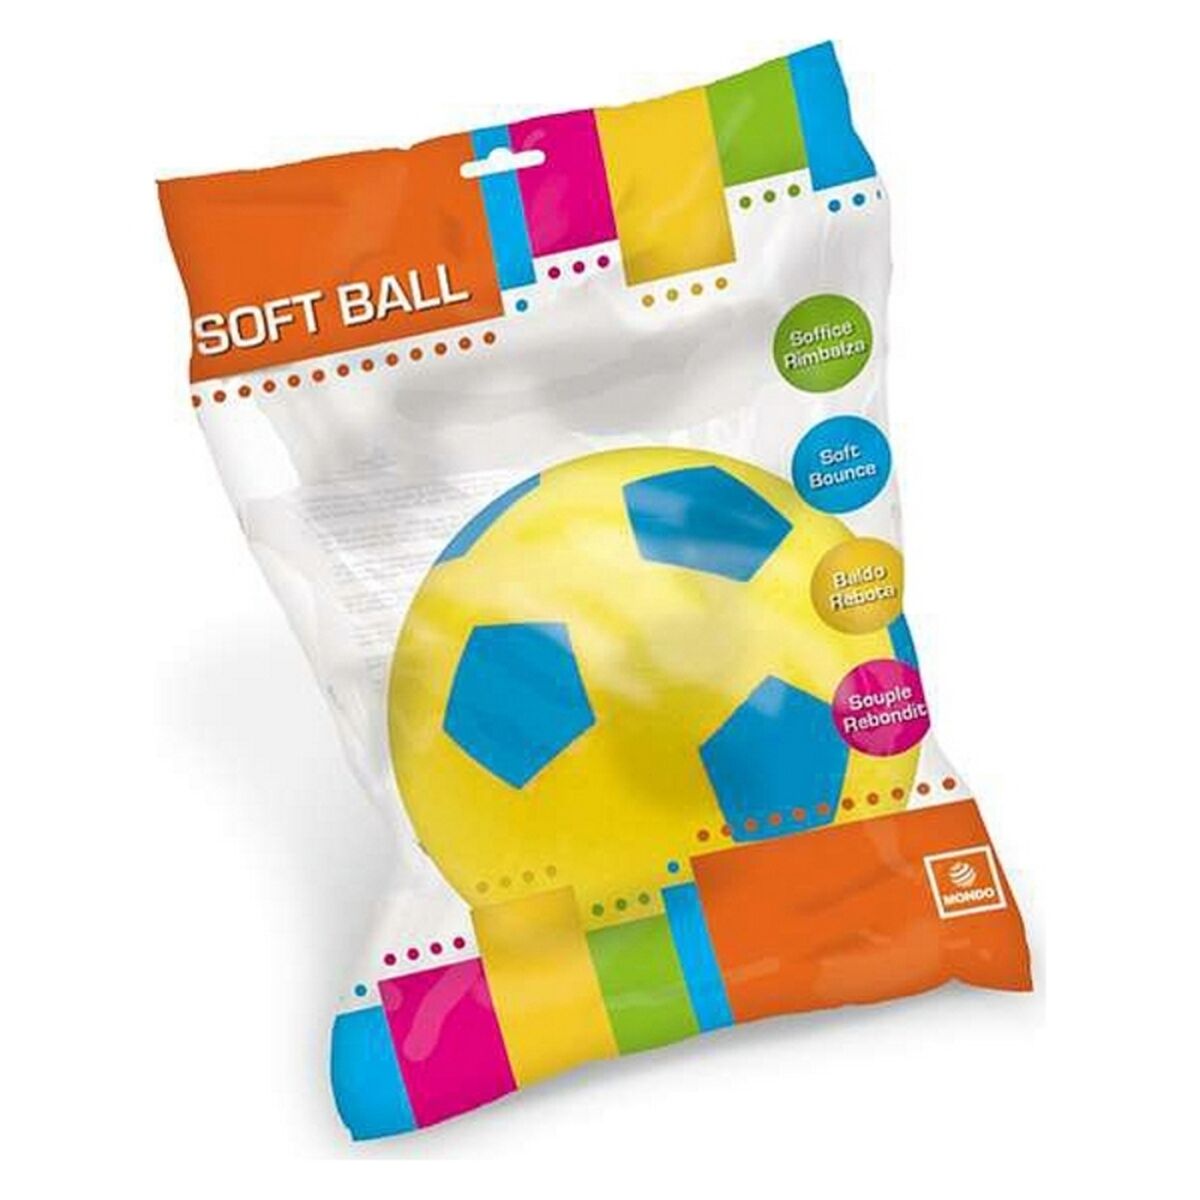 Ballon Soft Football (Ø 20 cm)